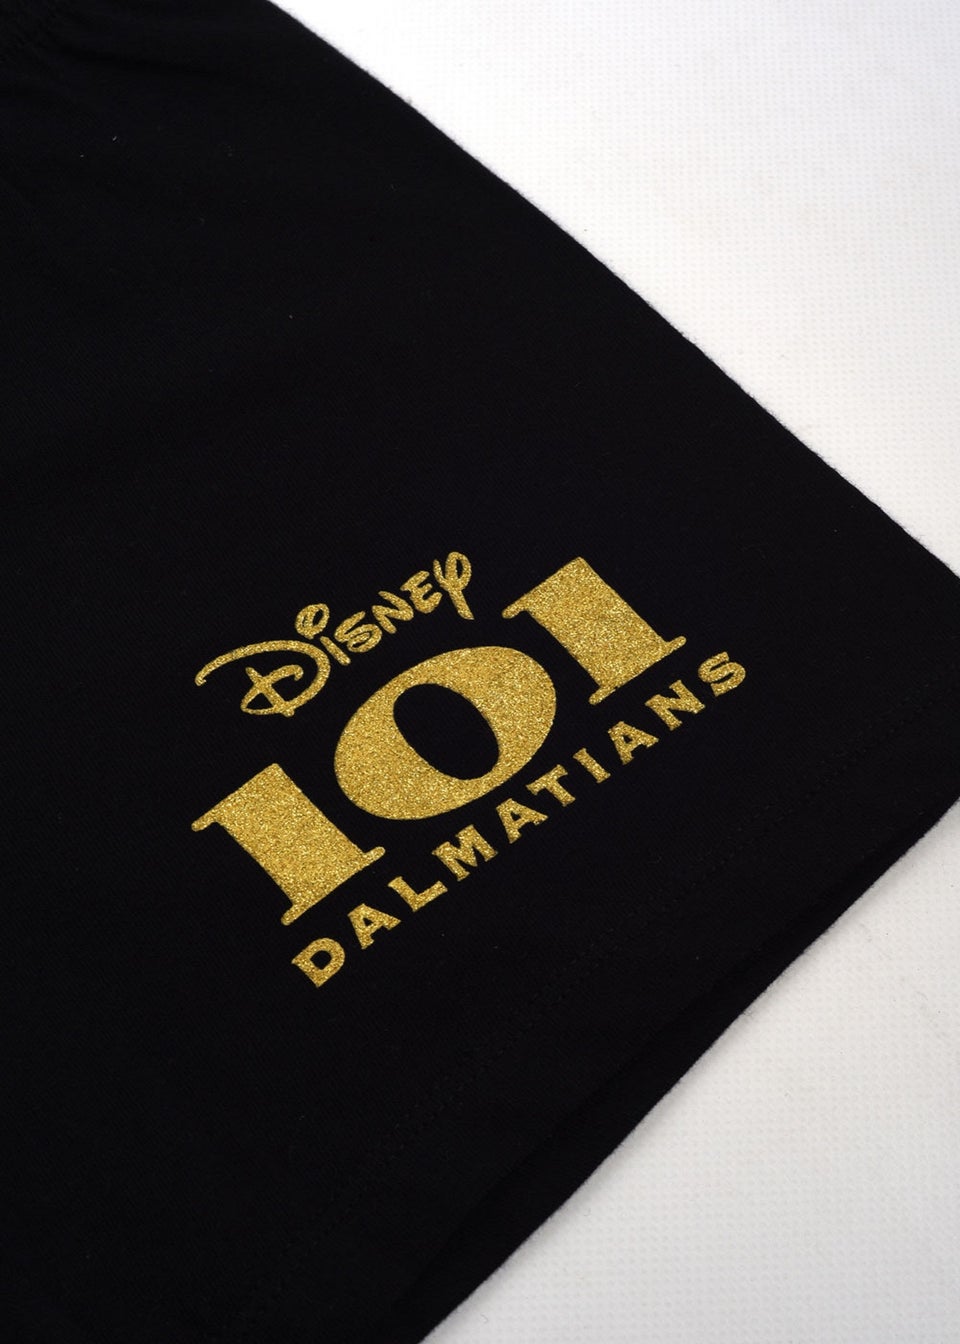 Disney Kids White 101 Dalmatians Pyjama Set (2-6 yrs)